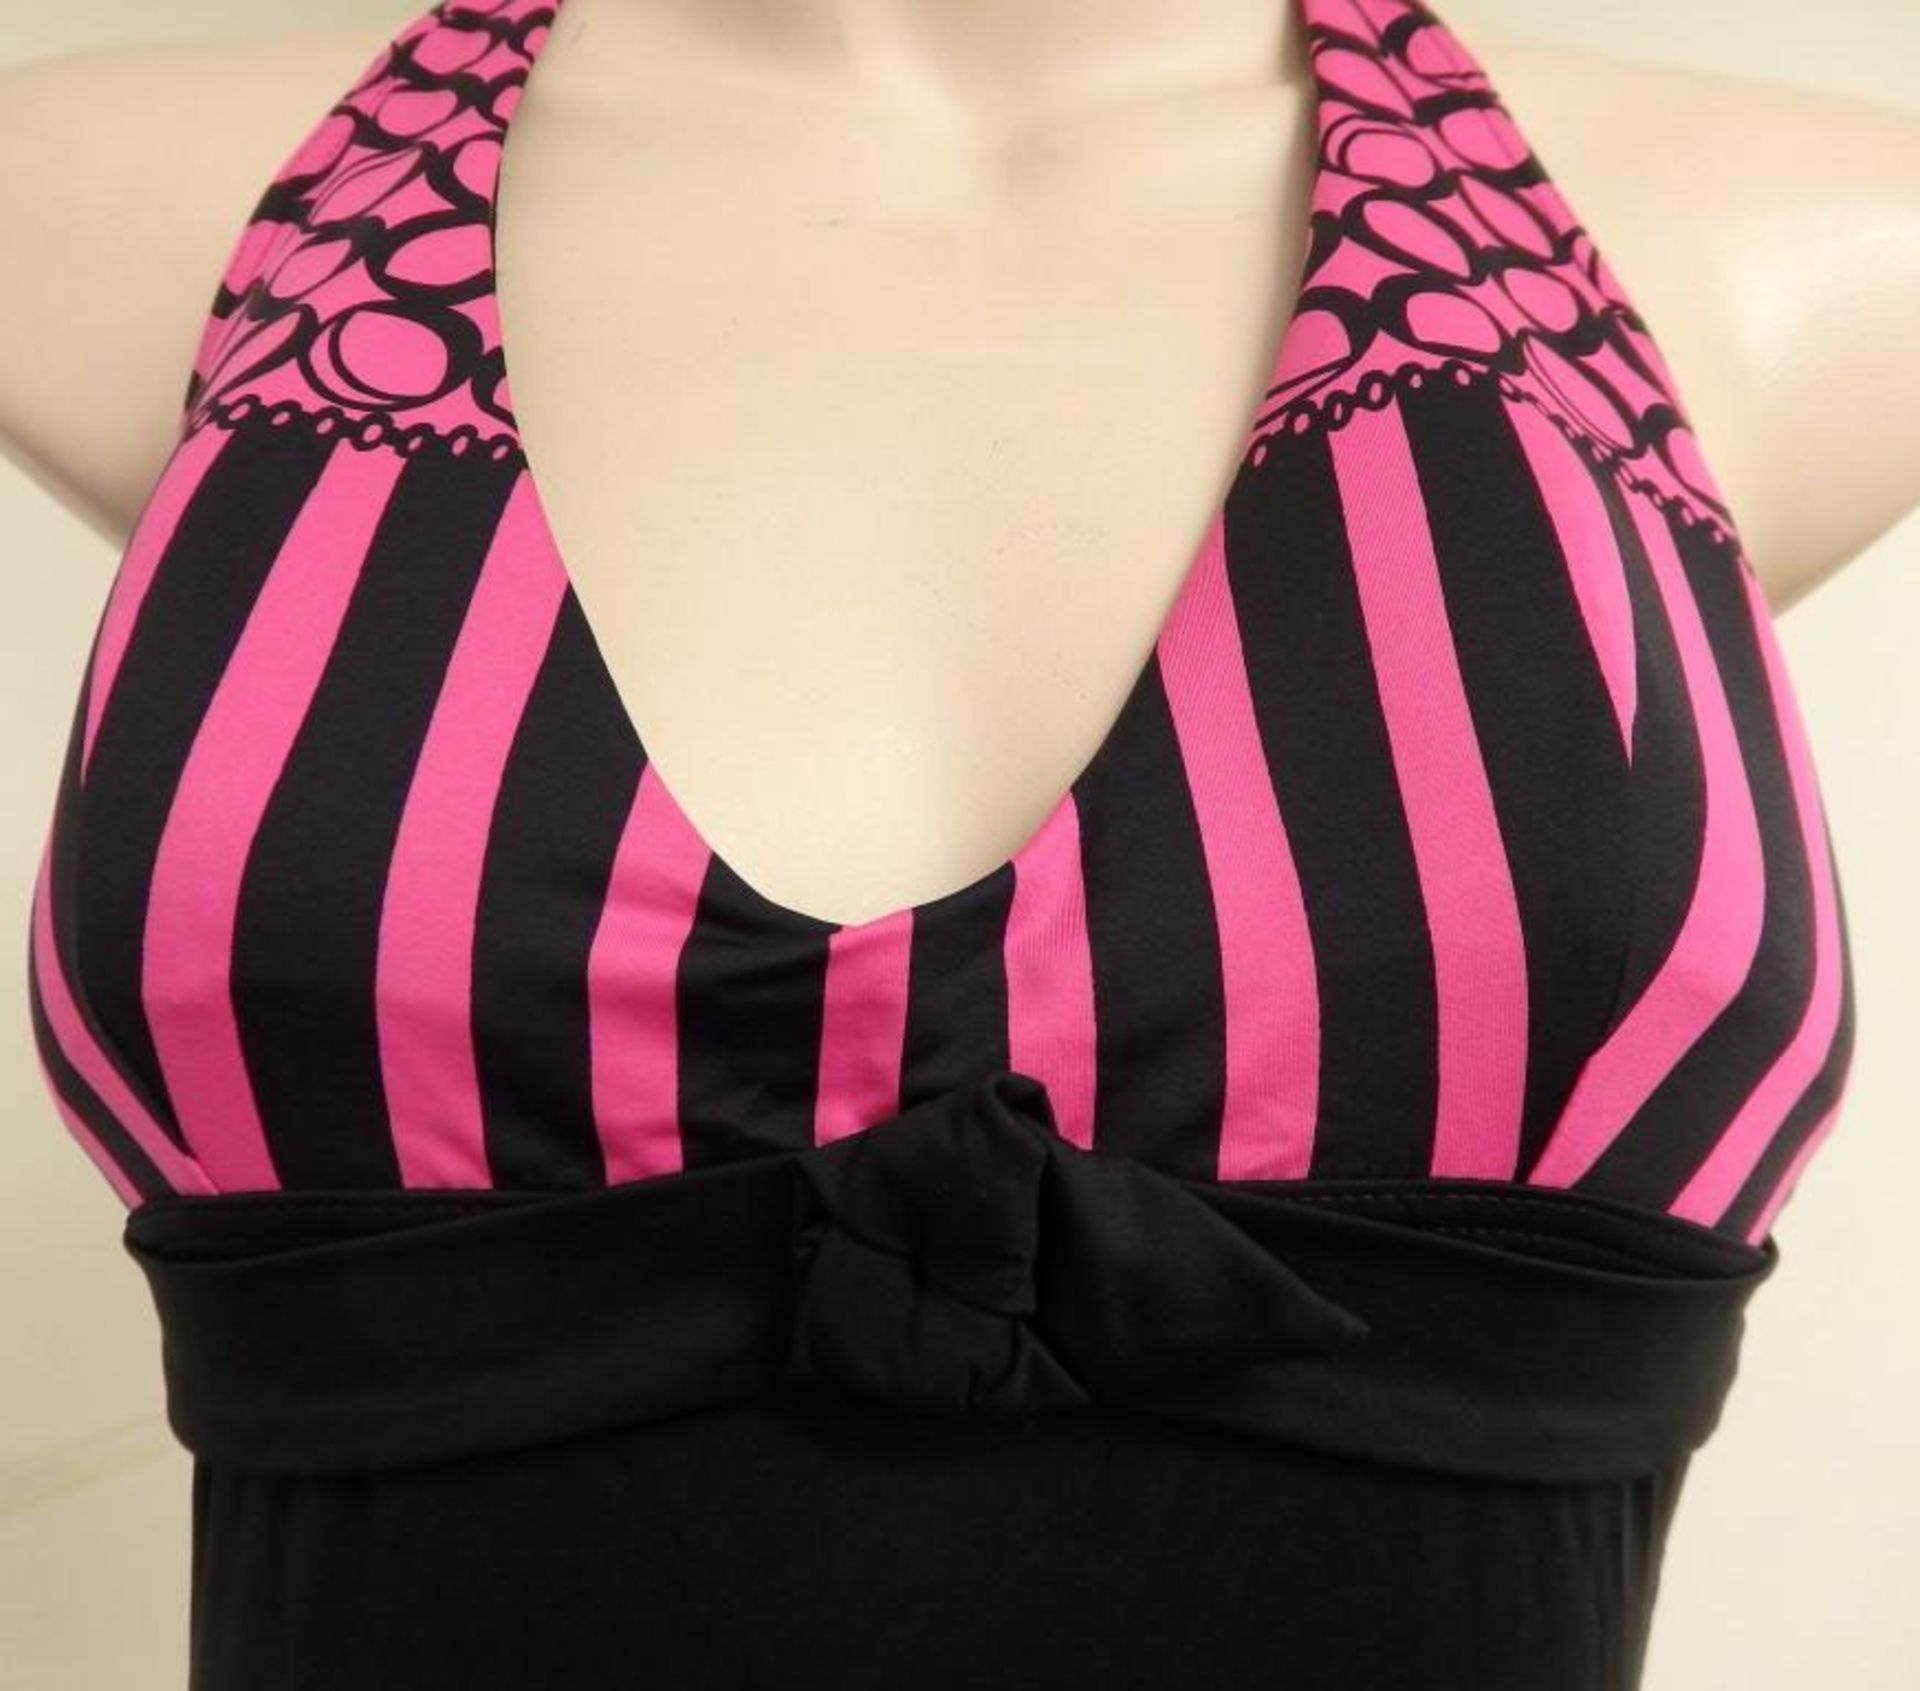 1 x Rasurel - Black/Pink patterned - Borneo Swimsuit - R20434 - Size 2C - UK 32 - Fr 85 - EU/Int 70 - Image 2 of 7